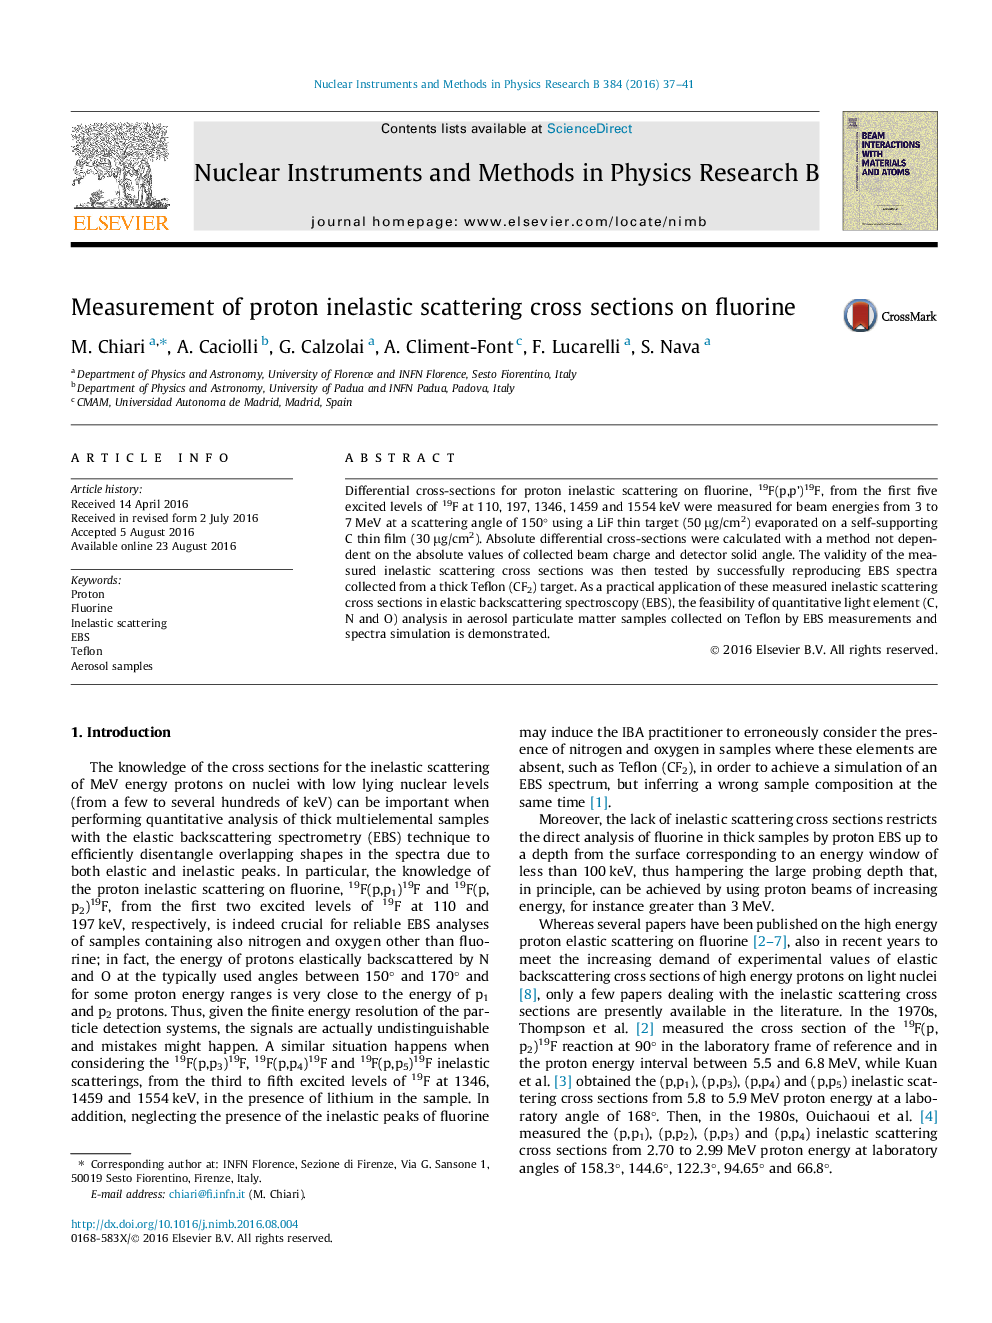 Measurement of proton inelastic scattering cross sections on fluorine